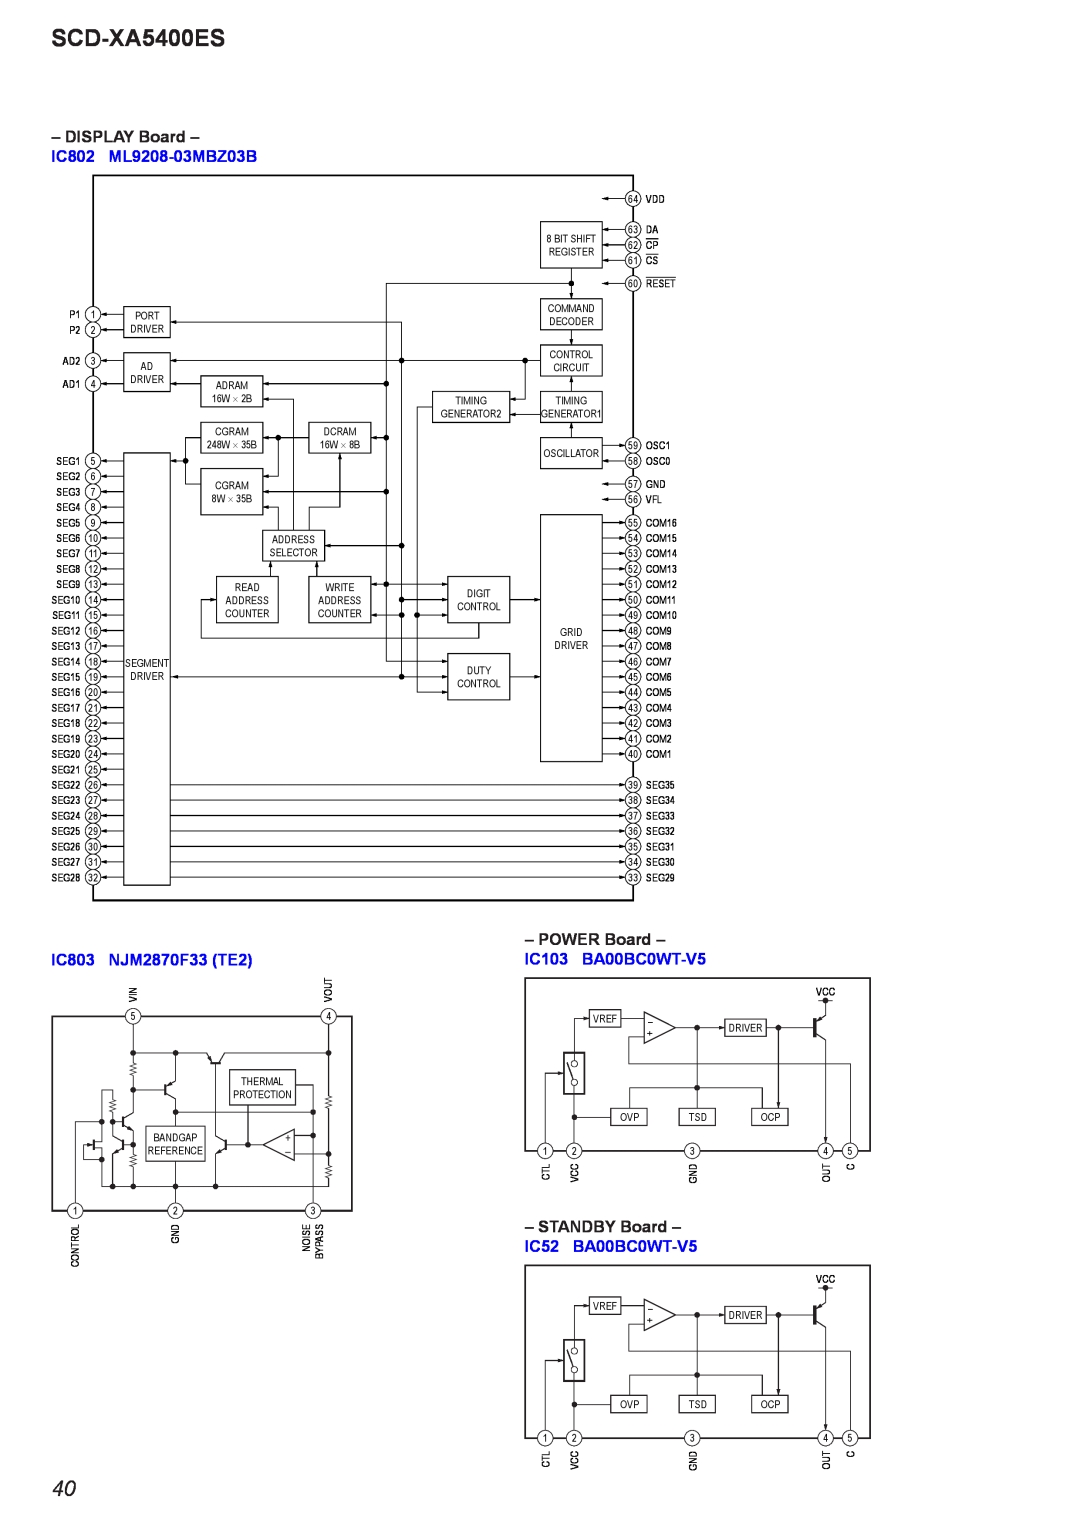 Sony SCD-XA5400ES DISPLAY Board, IC802, ML9208-03MBZ03B, POWER Board, IC803, NJM2870F33 TE2, IC103, BA00BC0WT-V5, IC52 